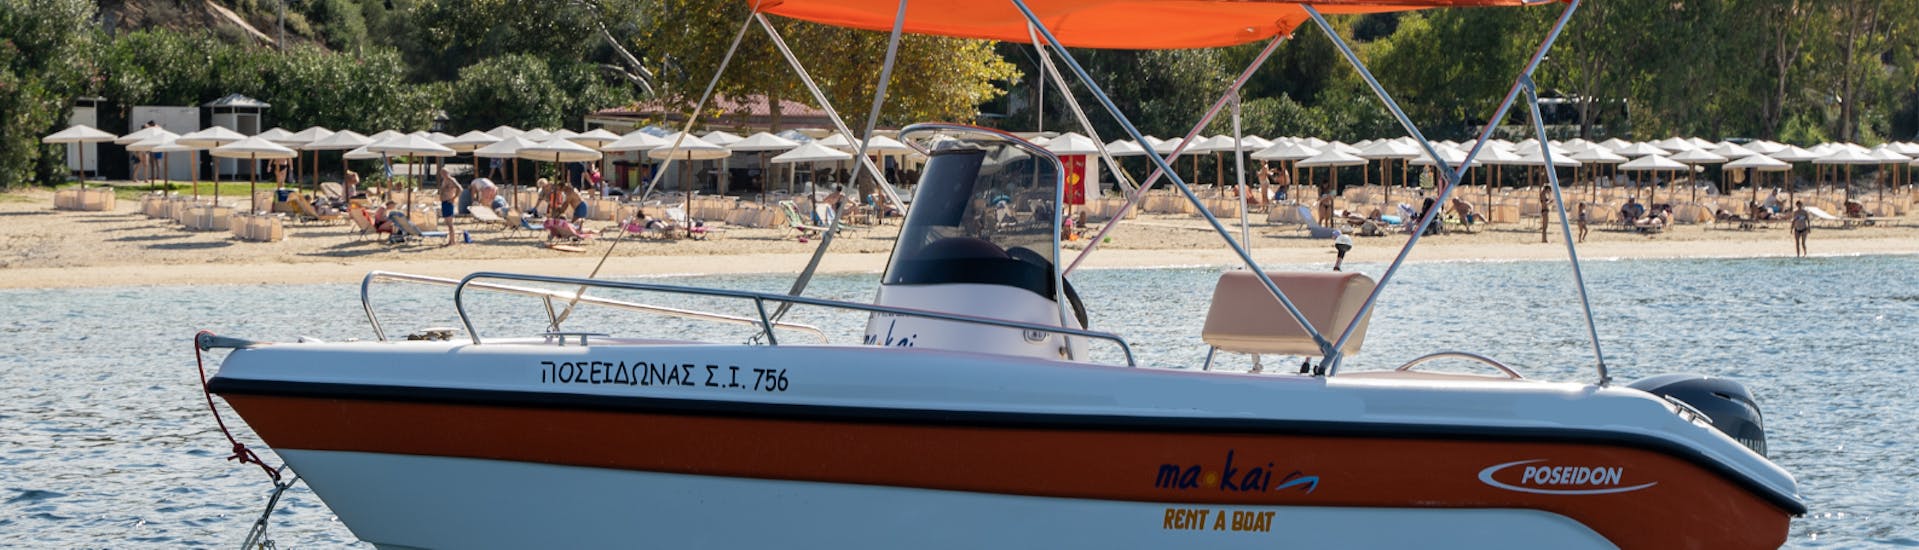 Bootsverleih in Ouranoupoli (bis zu 6 Personen) - Ammouliani & Drenia Inseln.